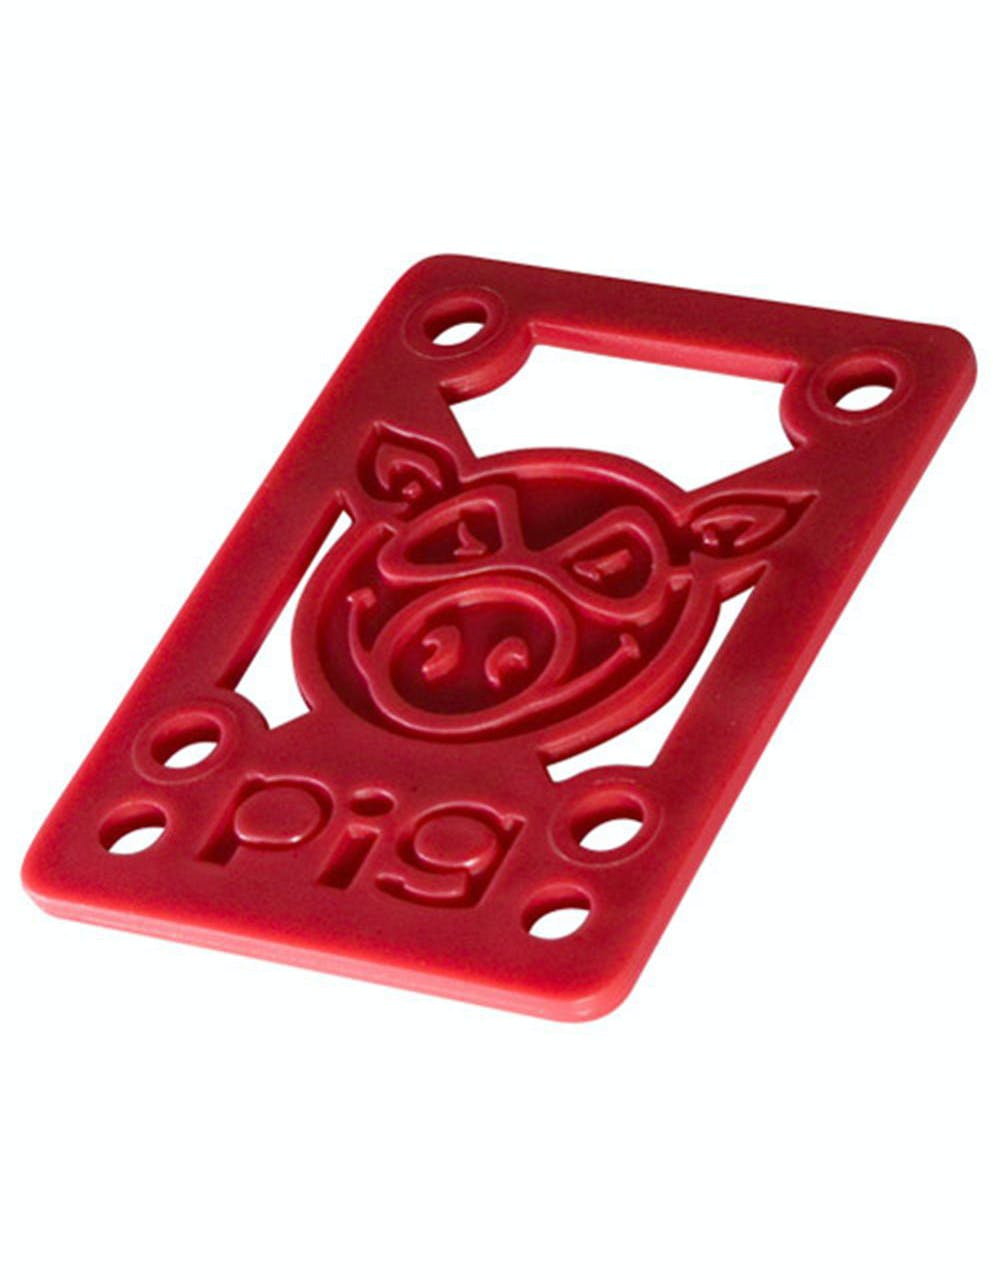 Pig Shockpads 1/8" Riser Pads